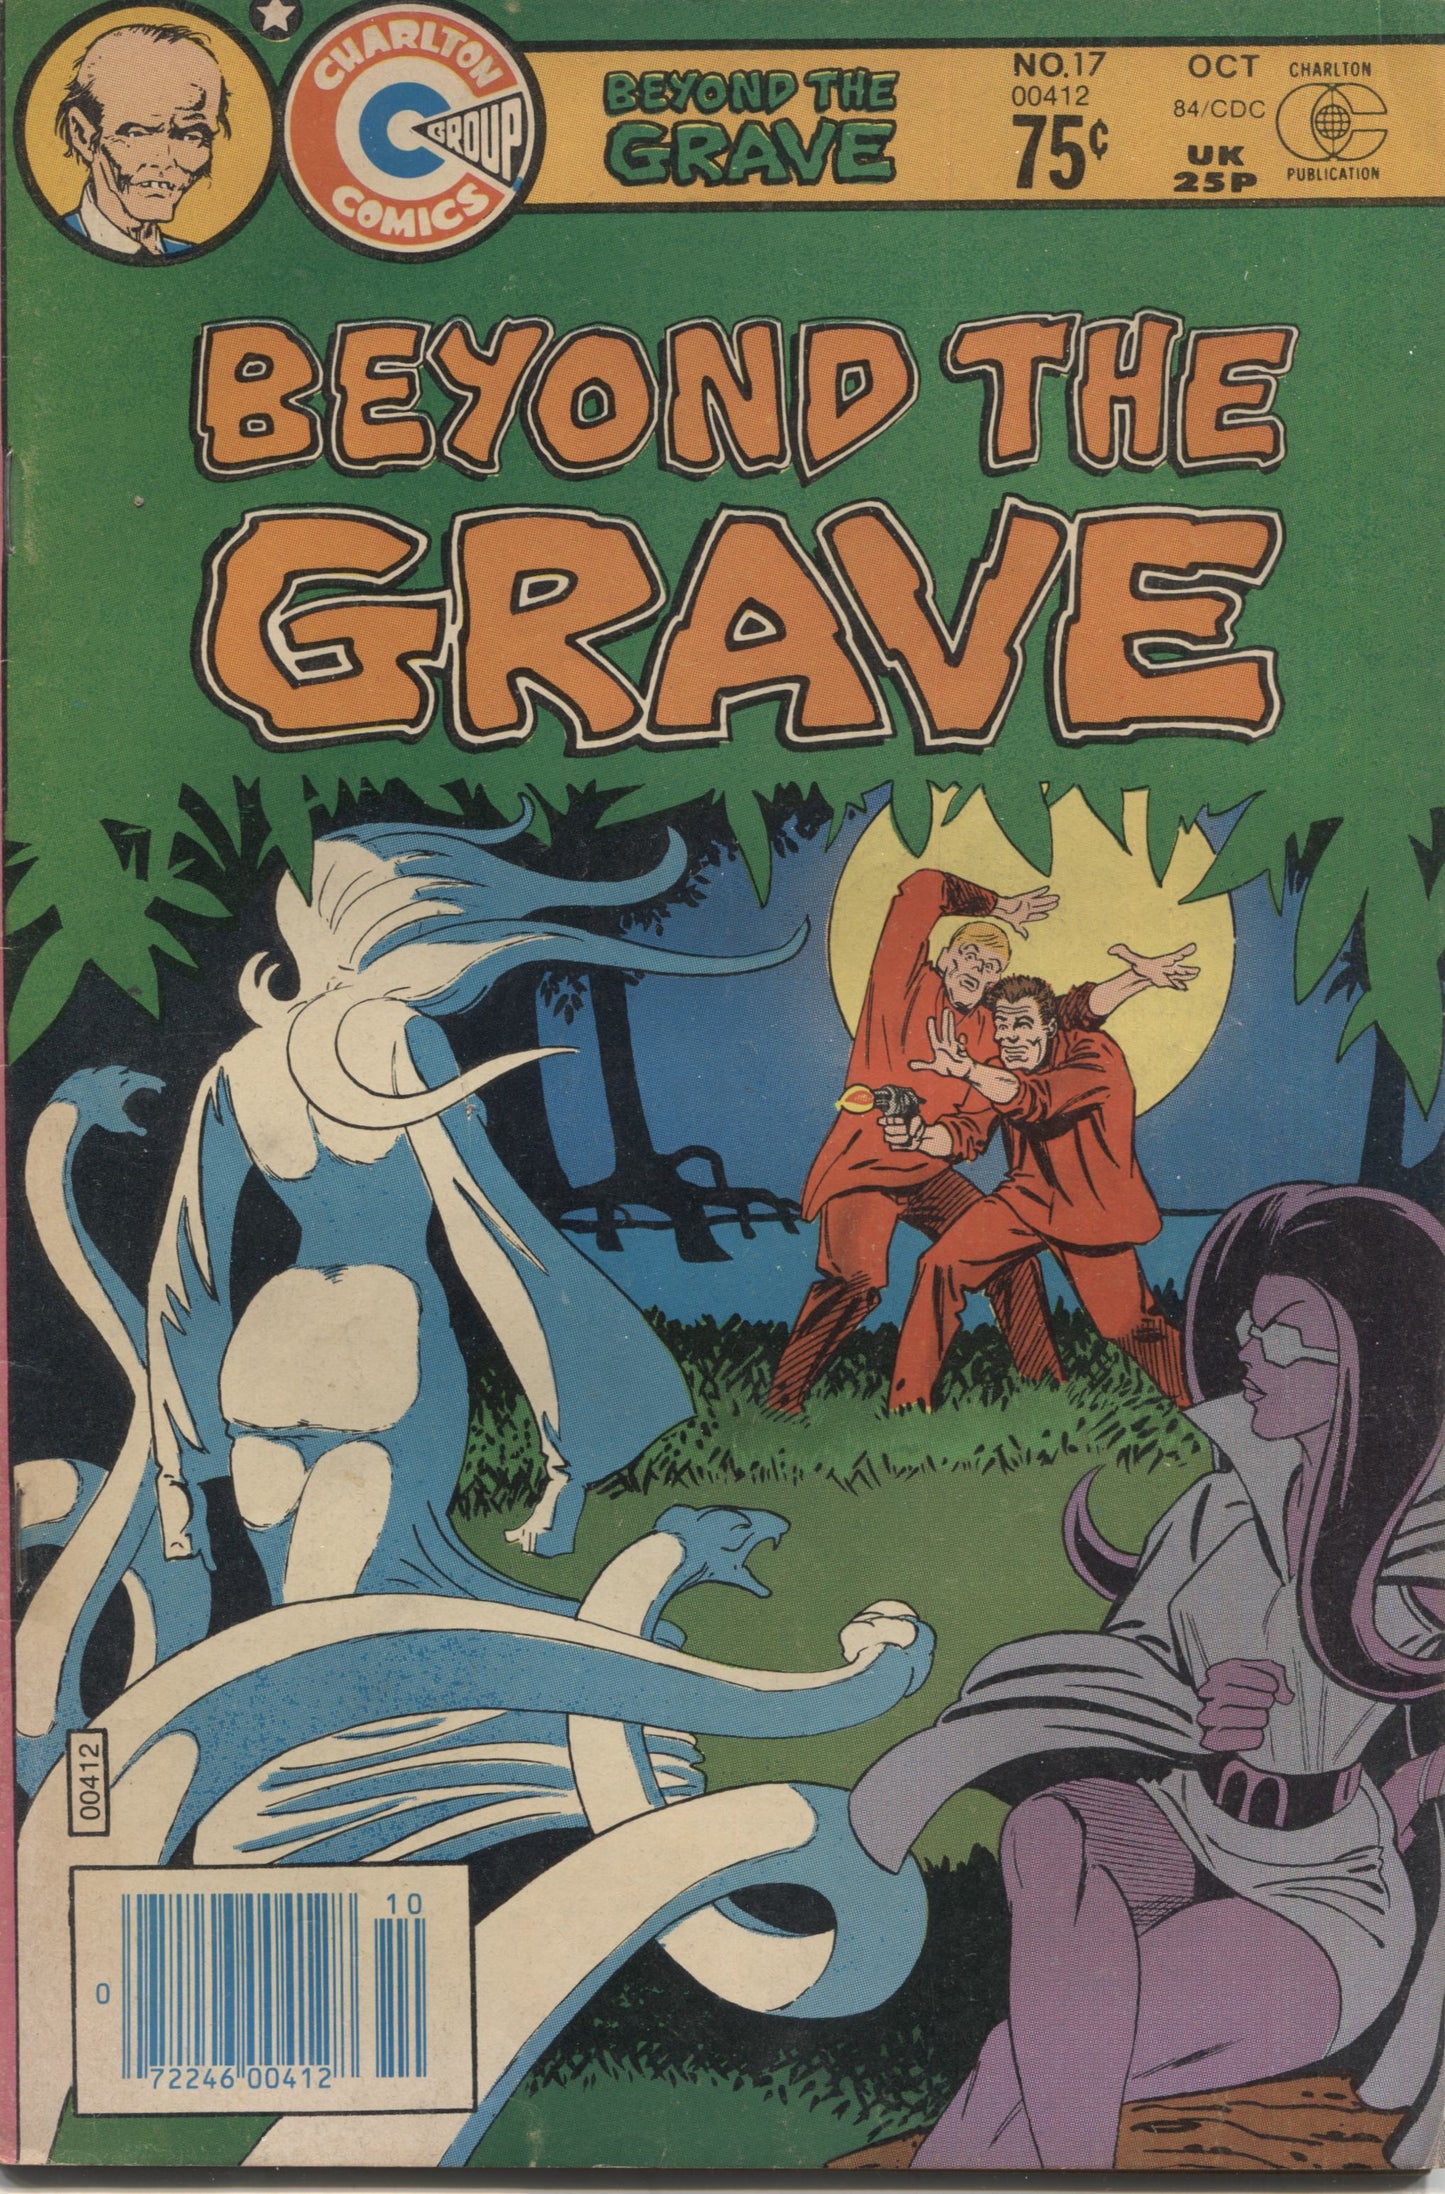 Beyond the Grave No.17, Charlton Comics, October 1984